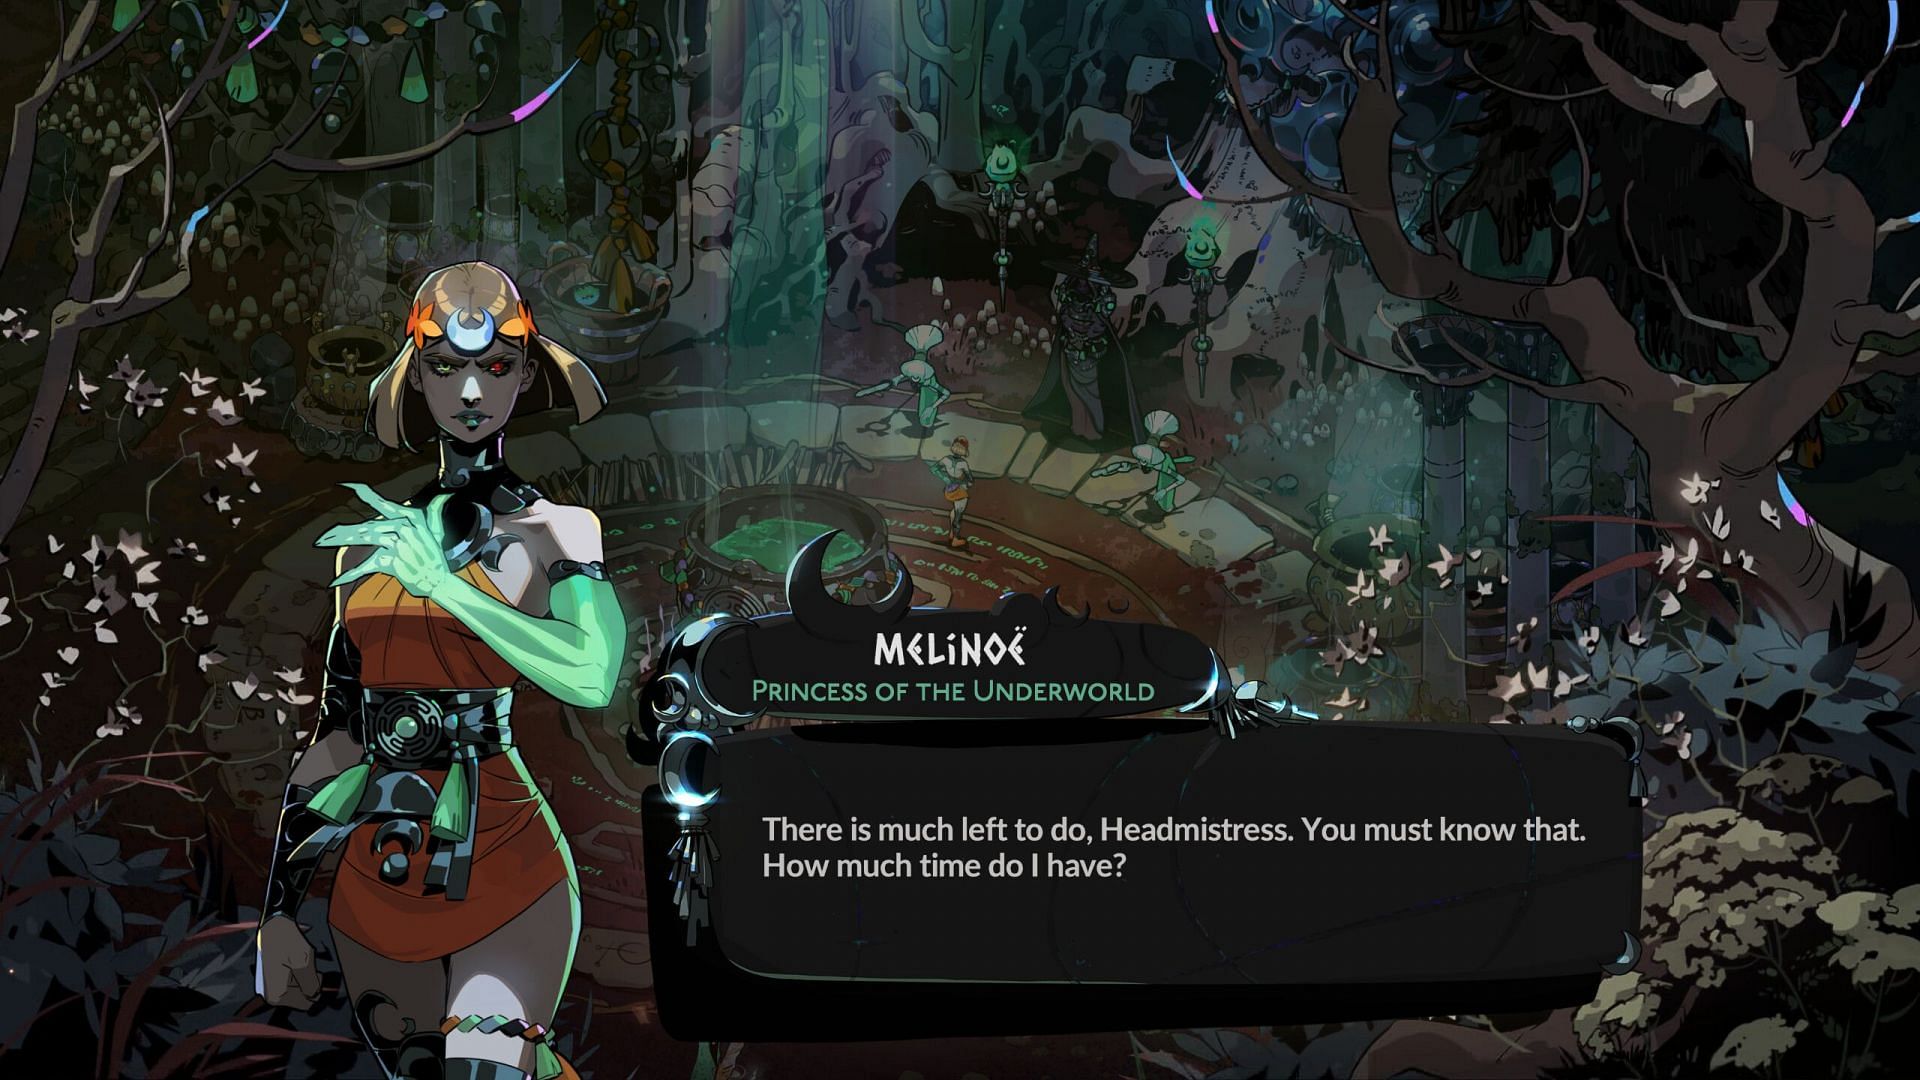 Indeed, Melinoe (Image via Supergiant Games)